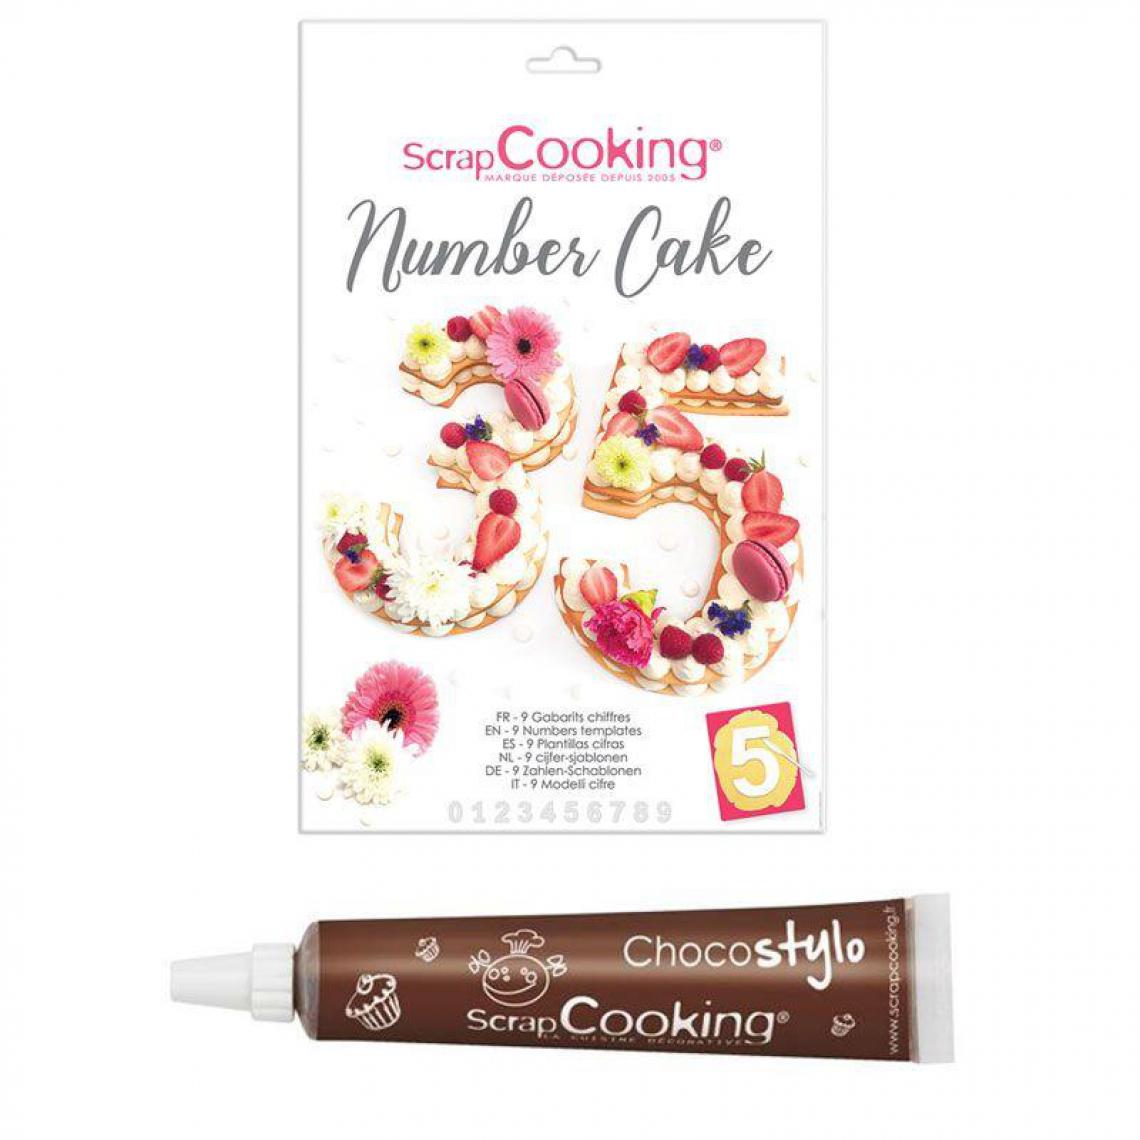 Scrapcooking - Coffret Number cake + 1 Stylo chocolat offert - Kits créatifs